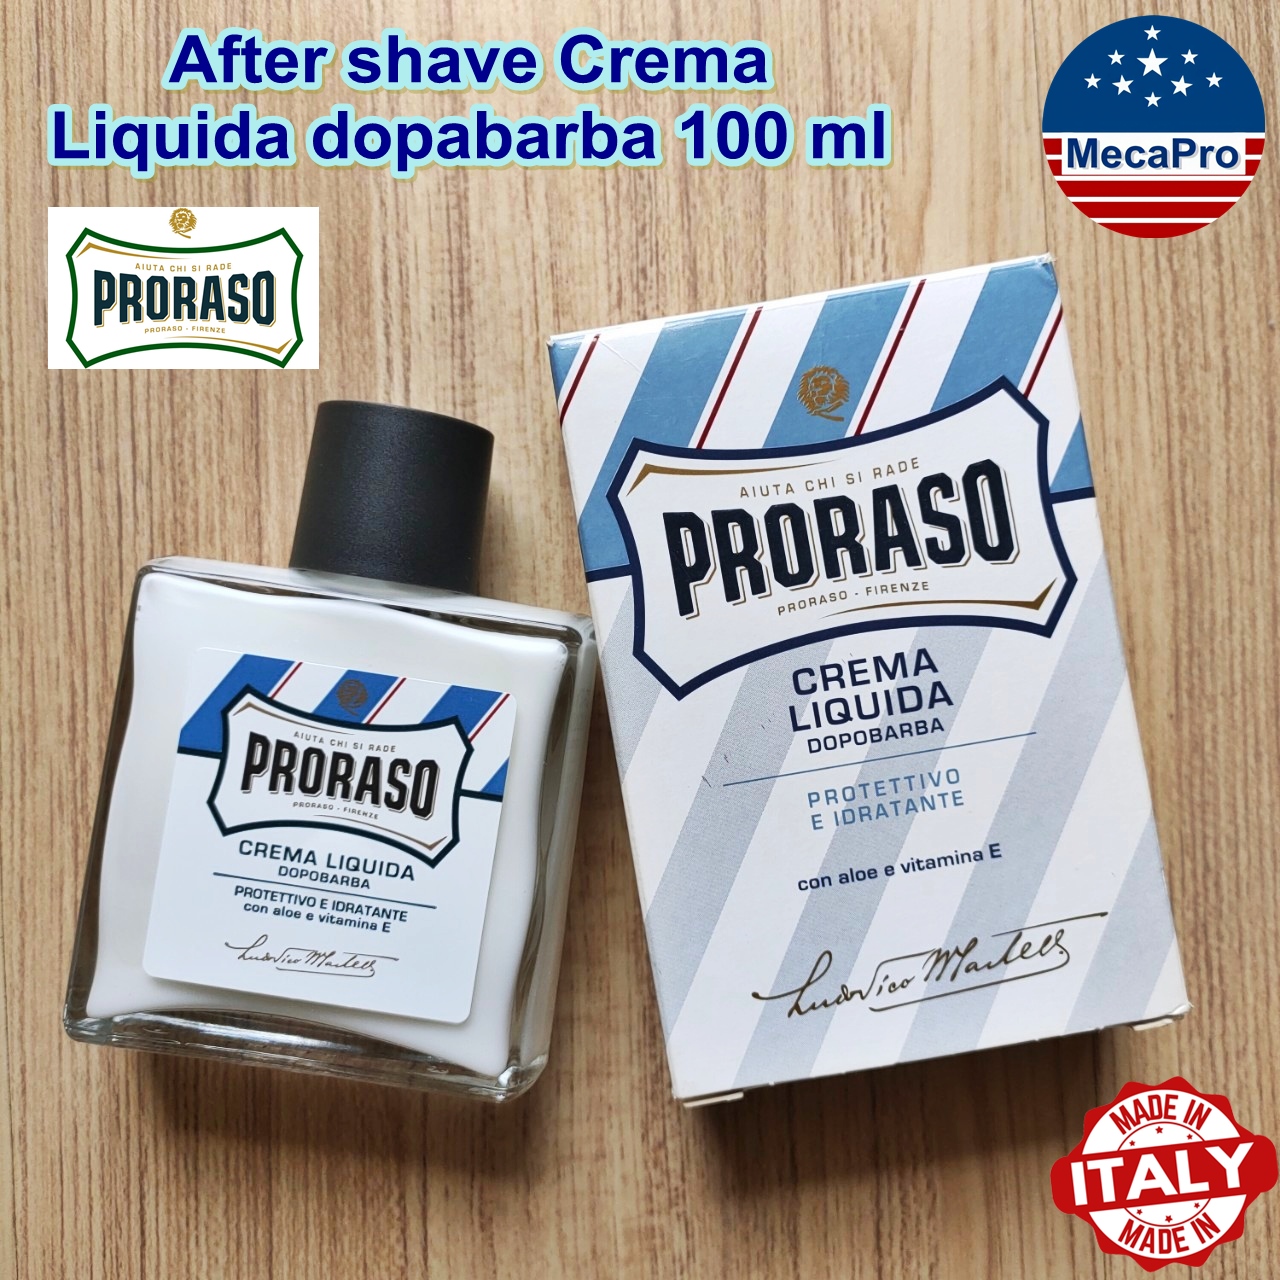 Proraso® After shave Crema Liquida dopabarba 100 ml Blue con aloe e vitamin E ผลิตภัณฑ์บำรุงผิวหน้า ครีม หลังการโกนหนวด